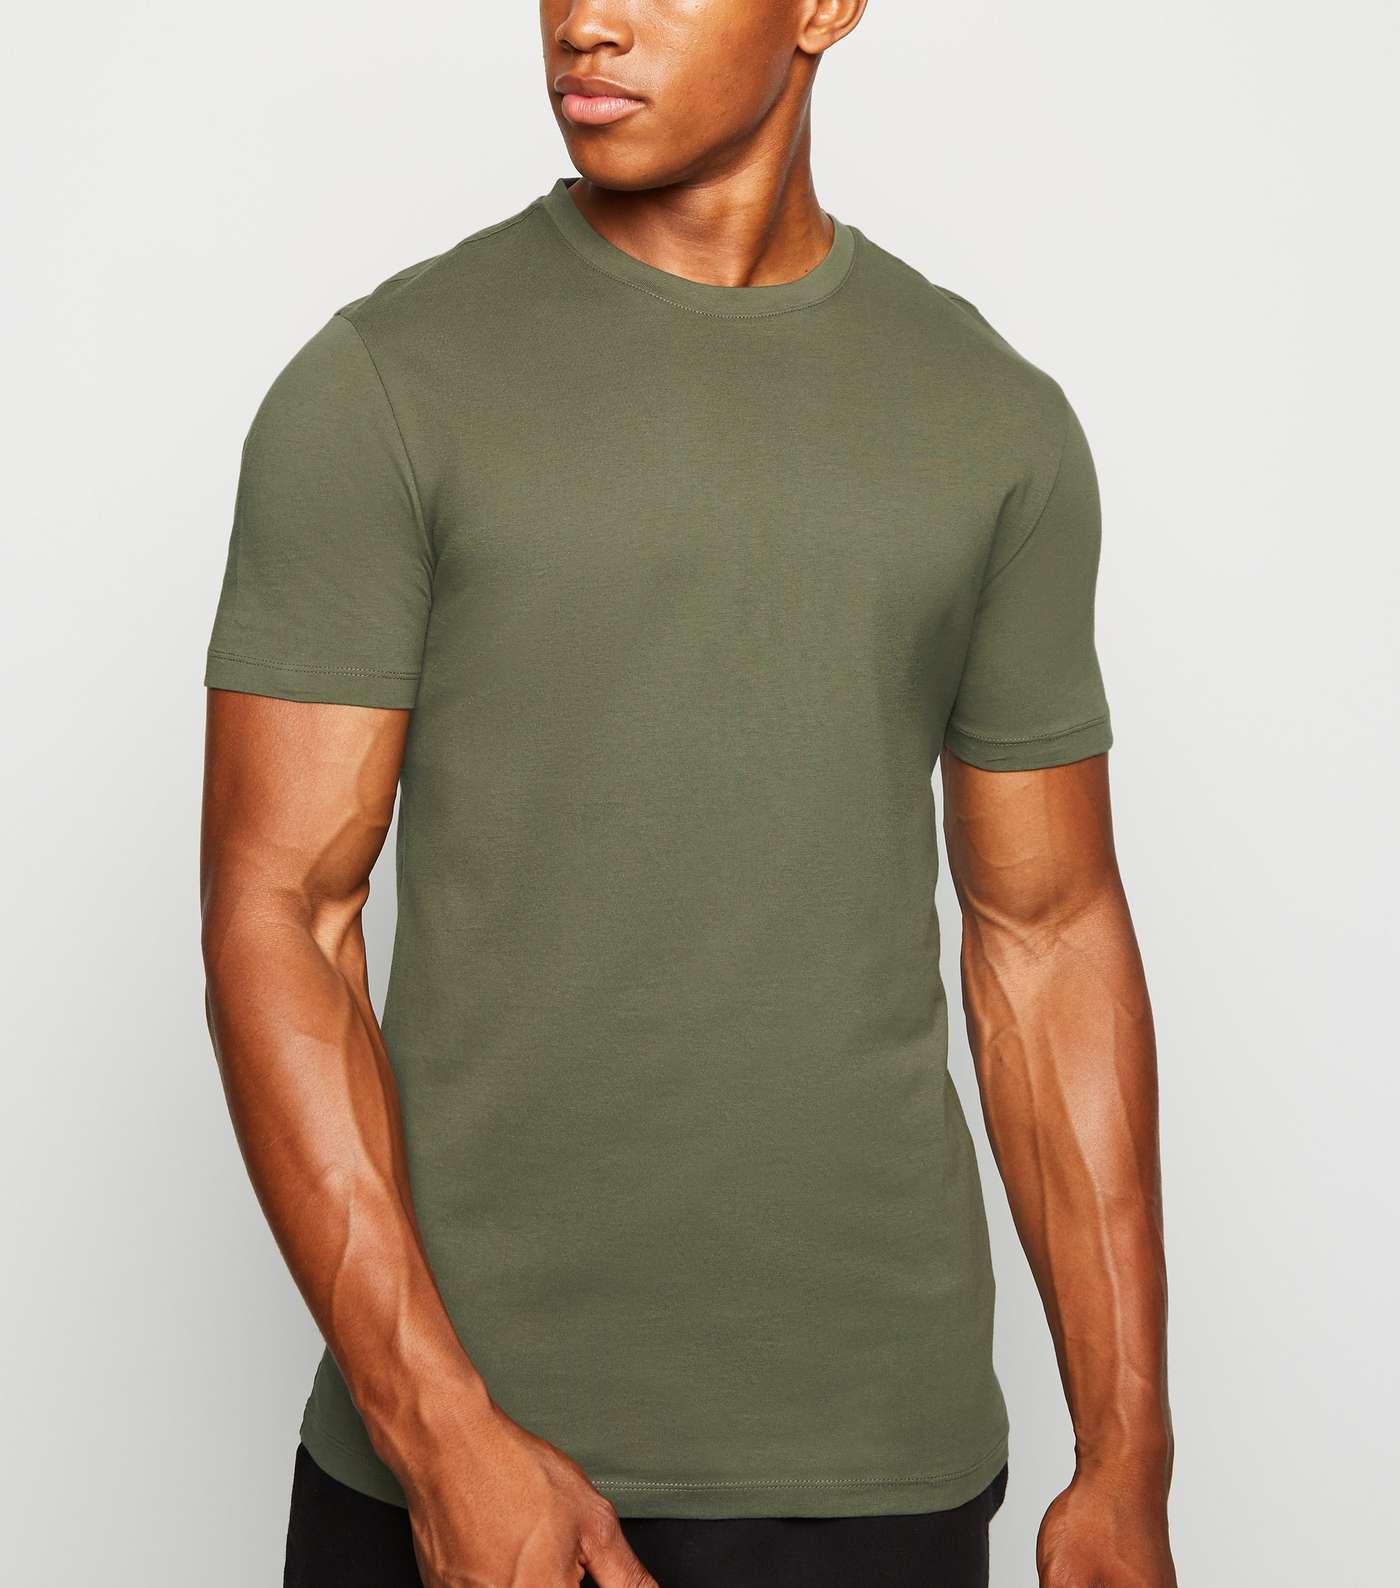 Khaki Short Sleeve Muscle Fit T-Shirt